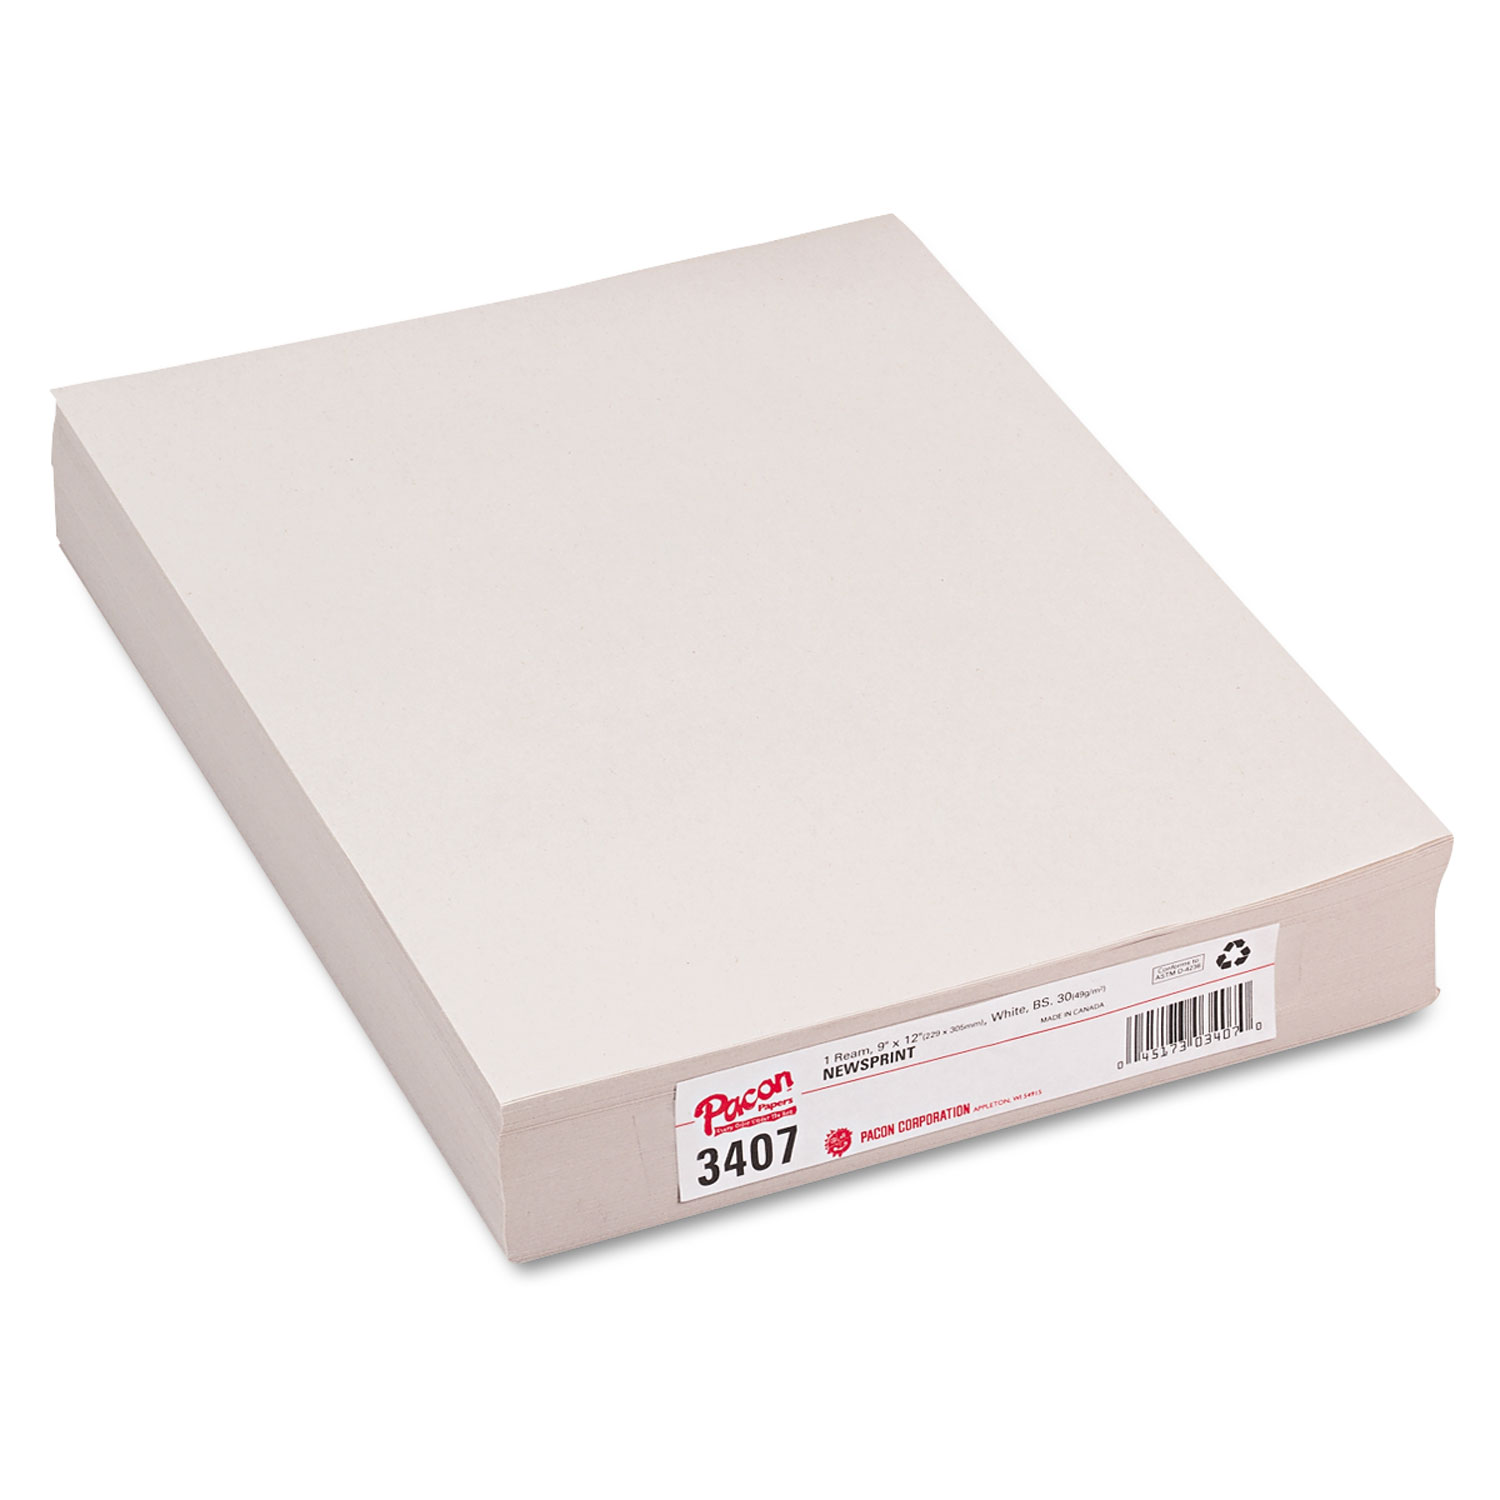  Pacon 3407 White Newsprint, 30lb, 9 x 12, White, 500/Pack (PAC3407) 